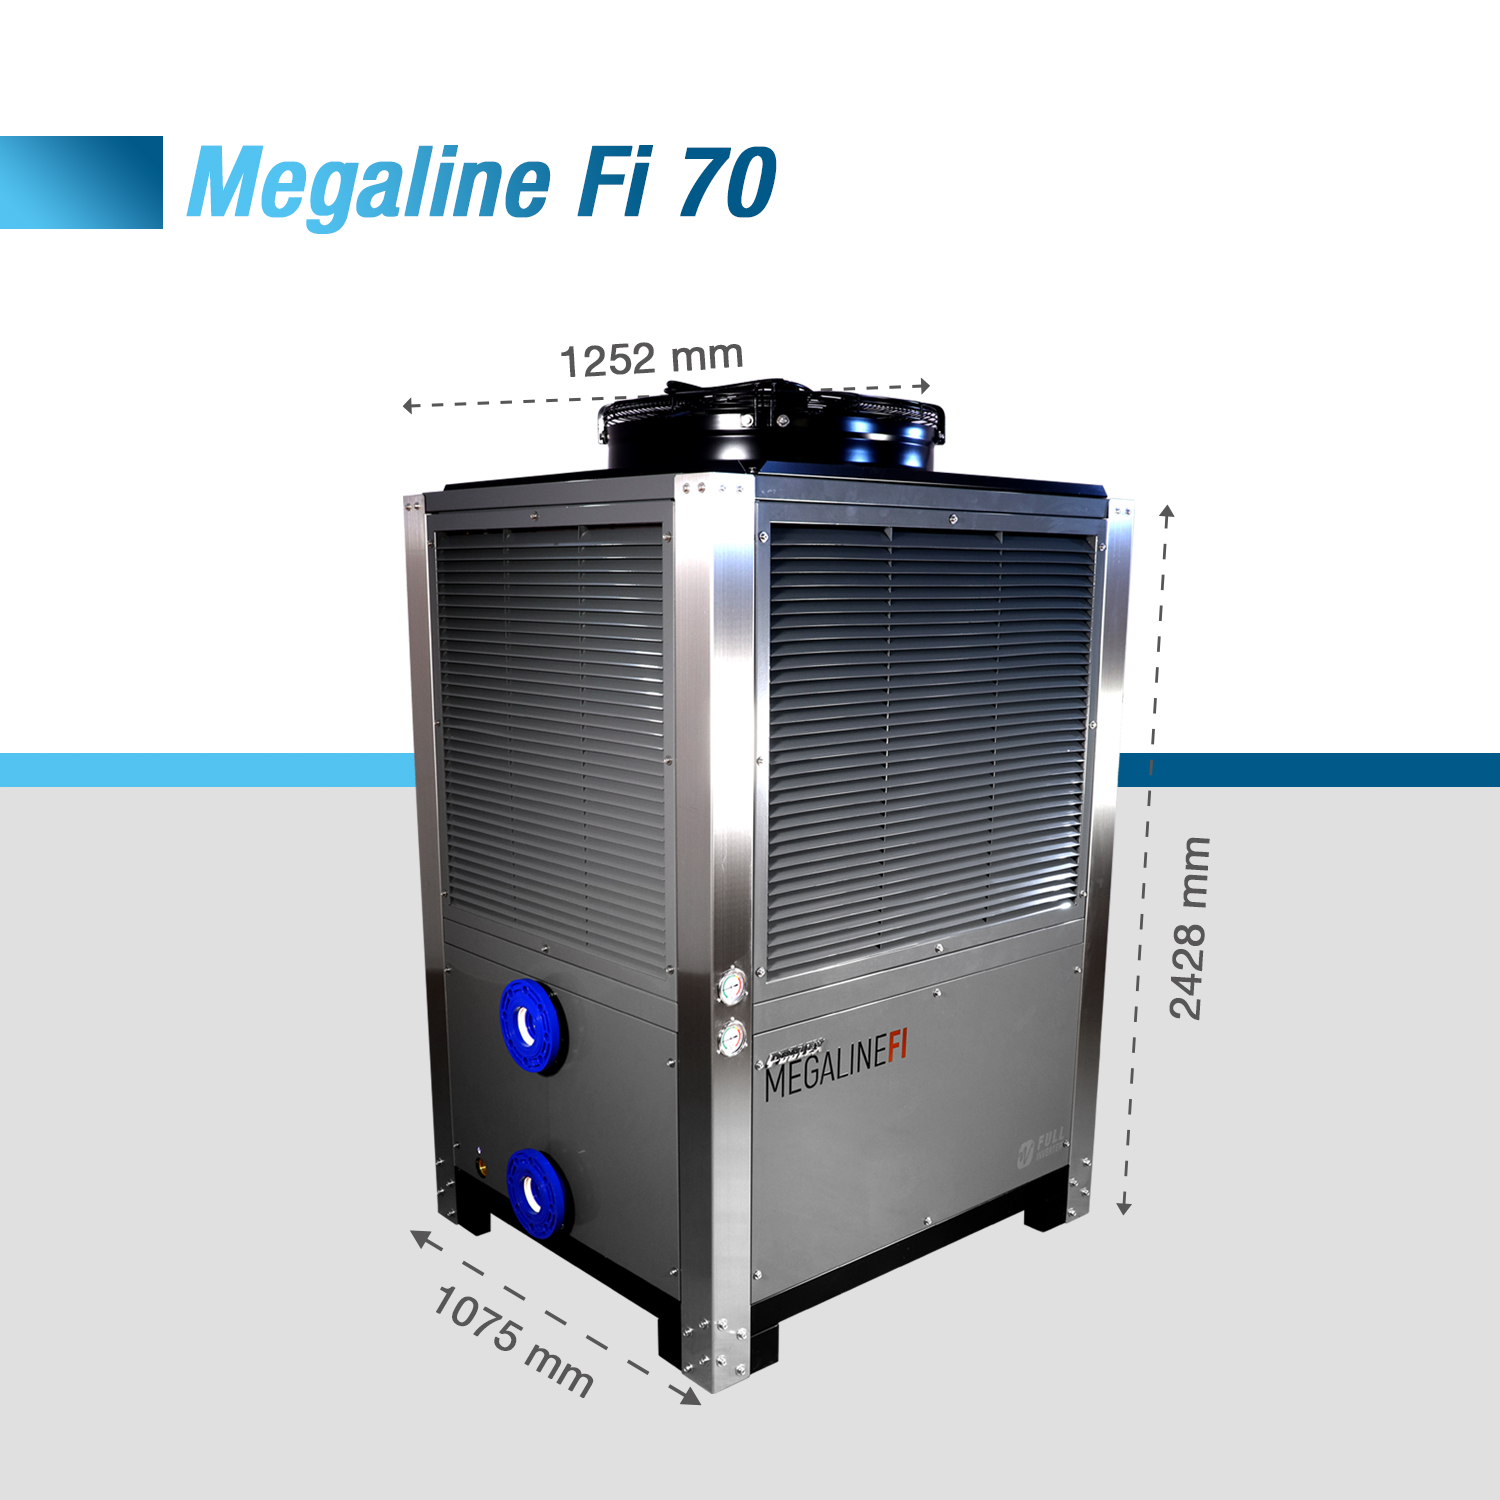 Megaline Fi 75 dimensions